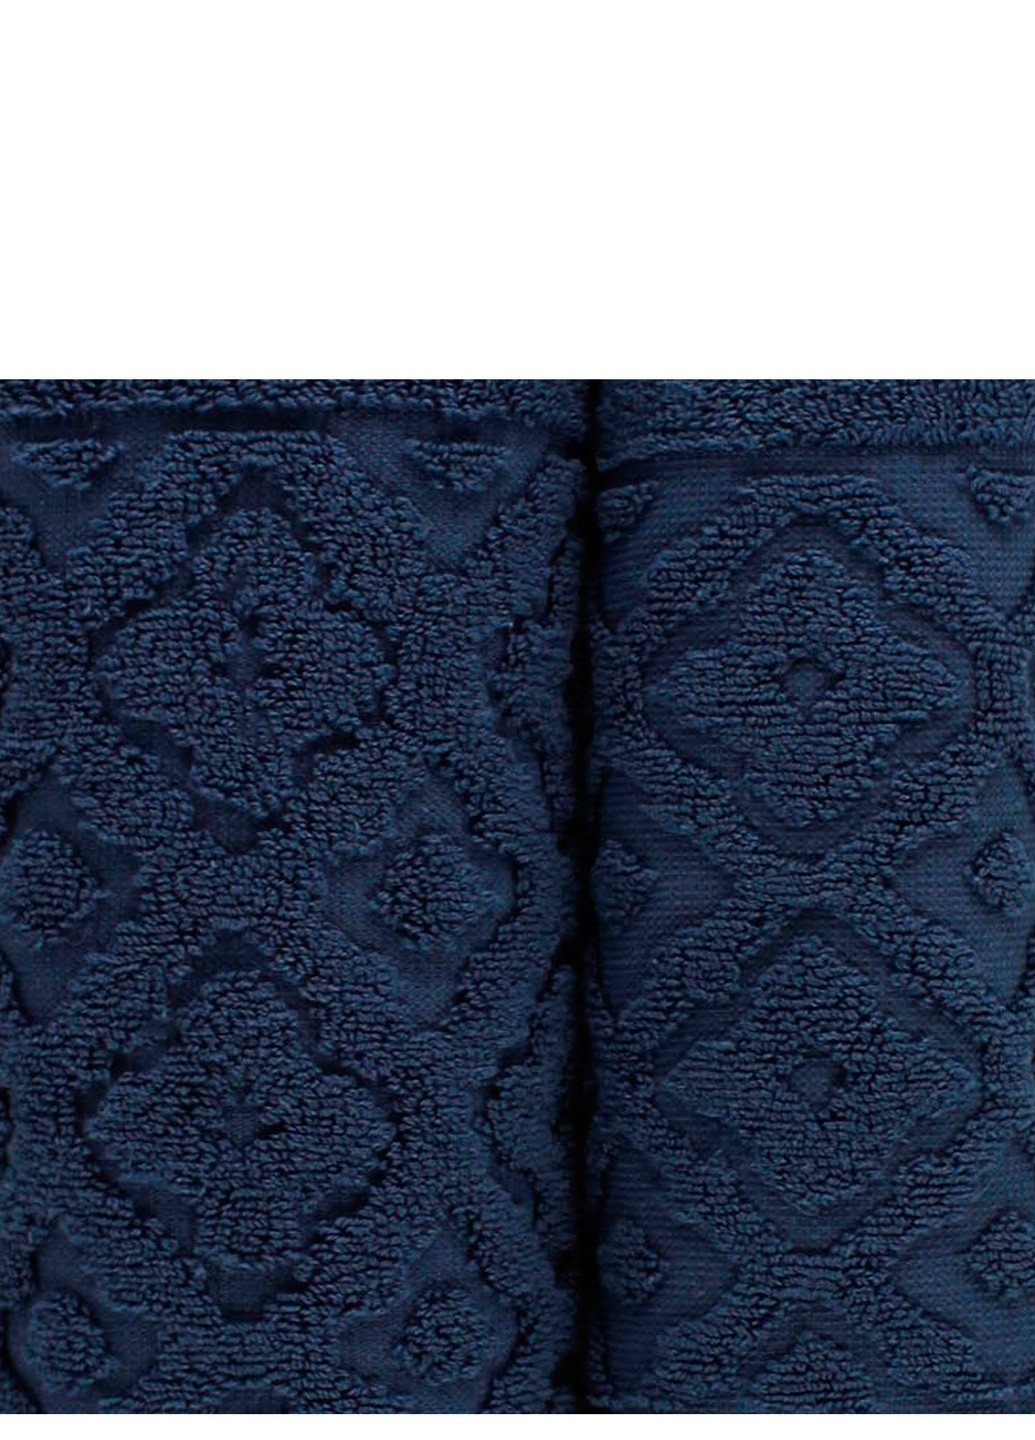 Bulgaria-Tex полотенце махровое lima, жаккардовое, с бордюром, деним, размер 70x140 cm синий производство - Болгария